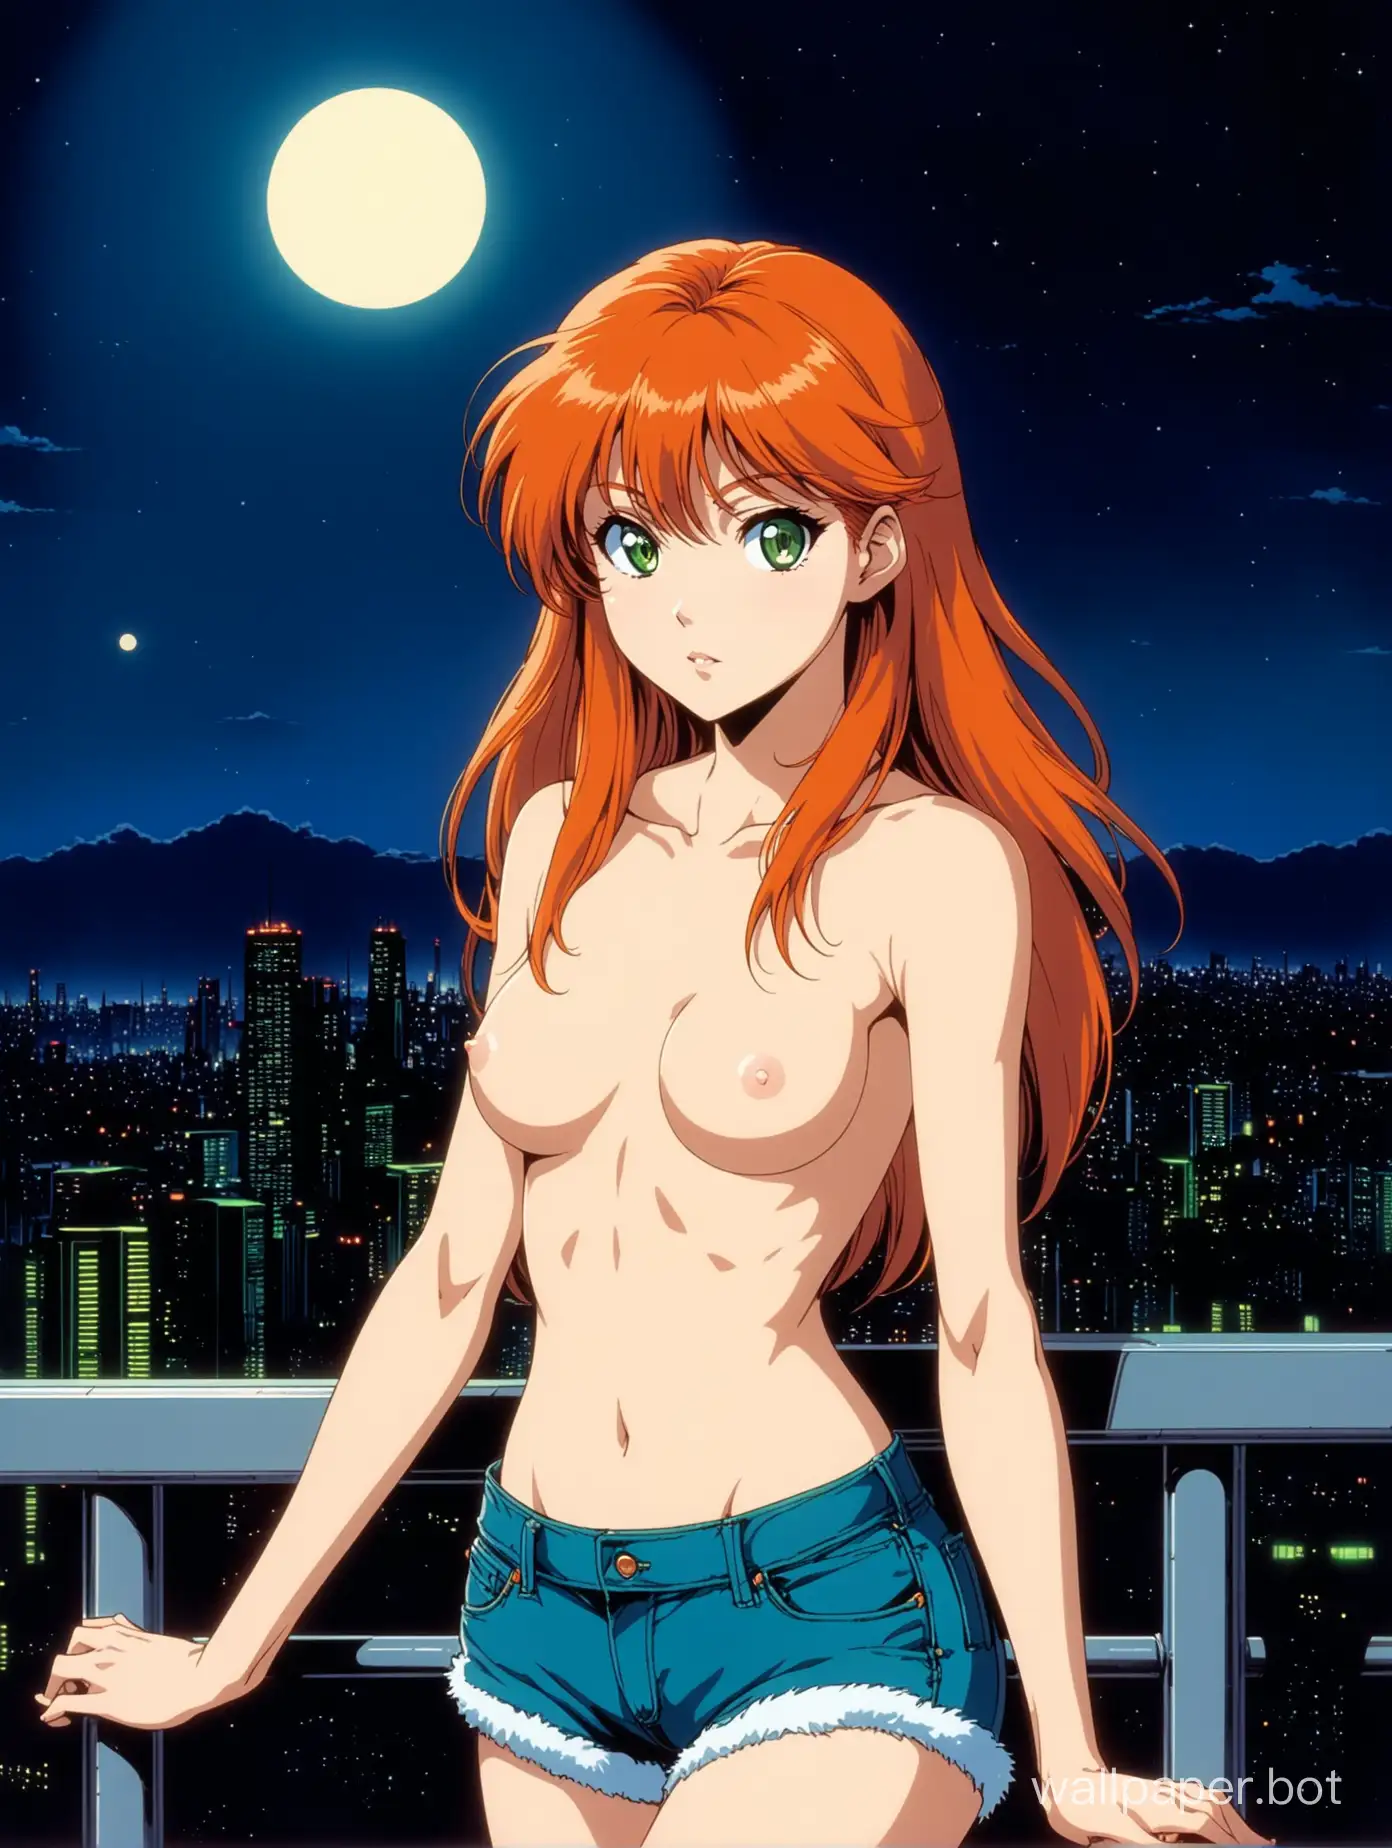 Nighttime-Urban-Scene-with-Anime-Redhead-Woman-in-Retro-Style